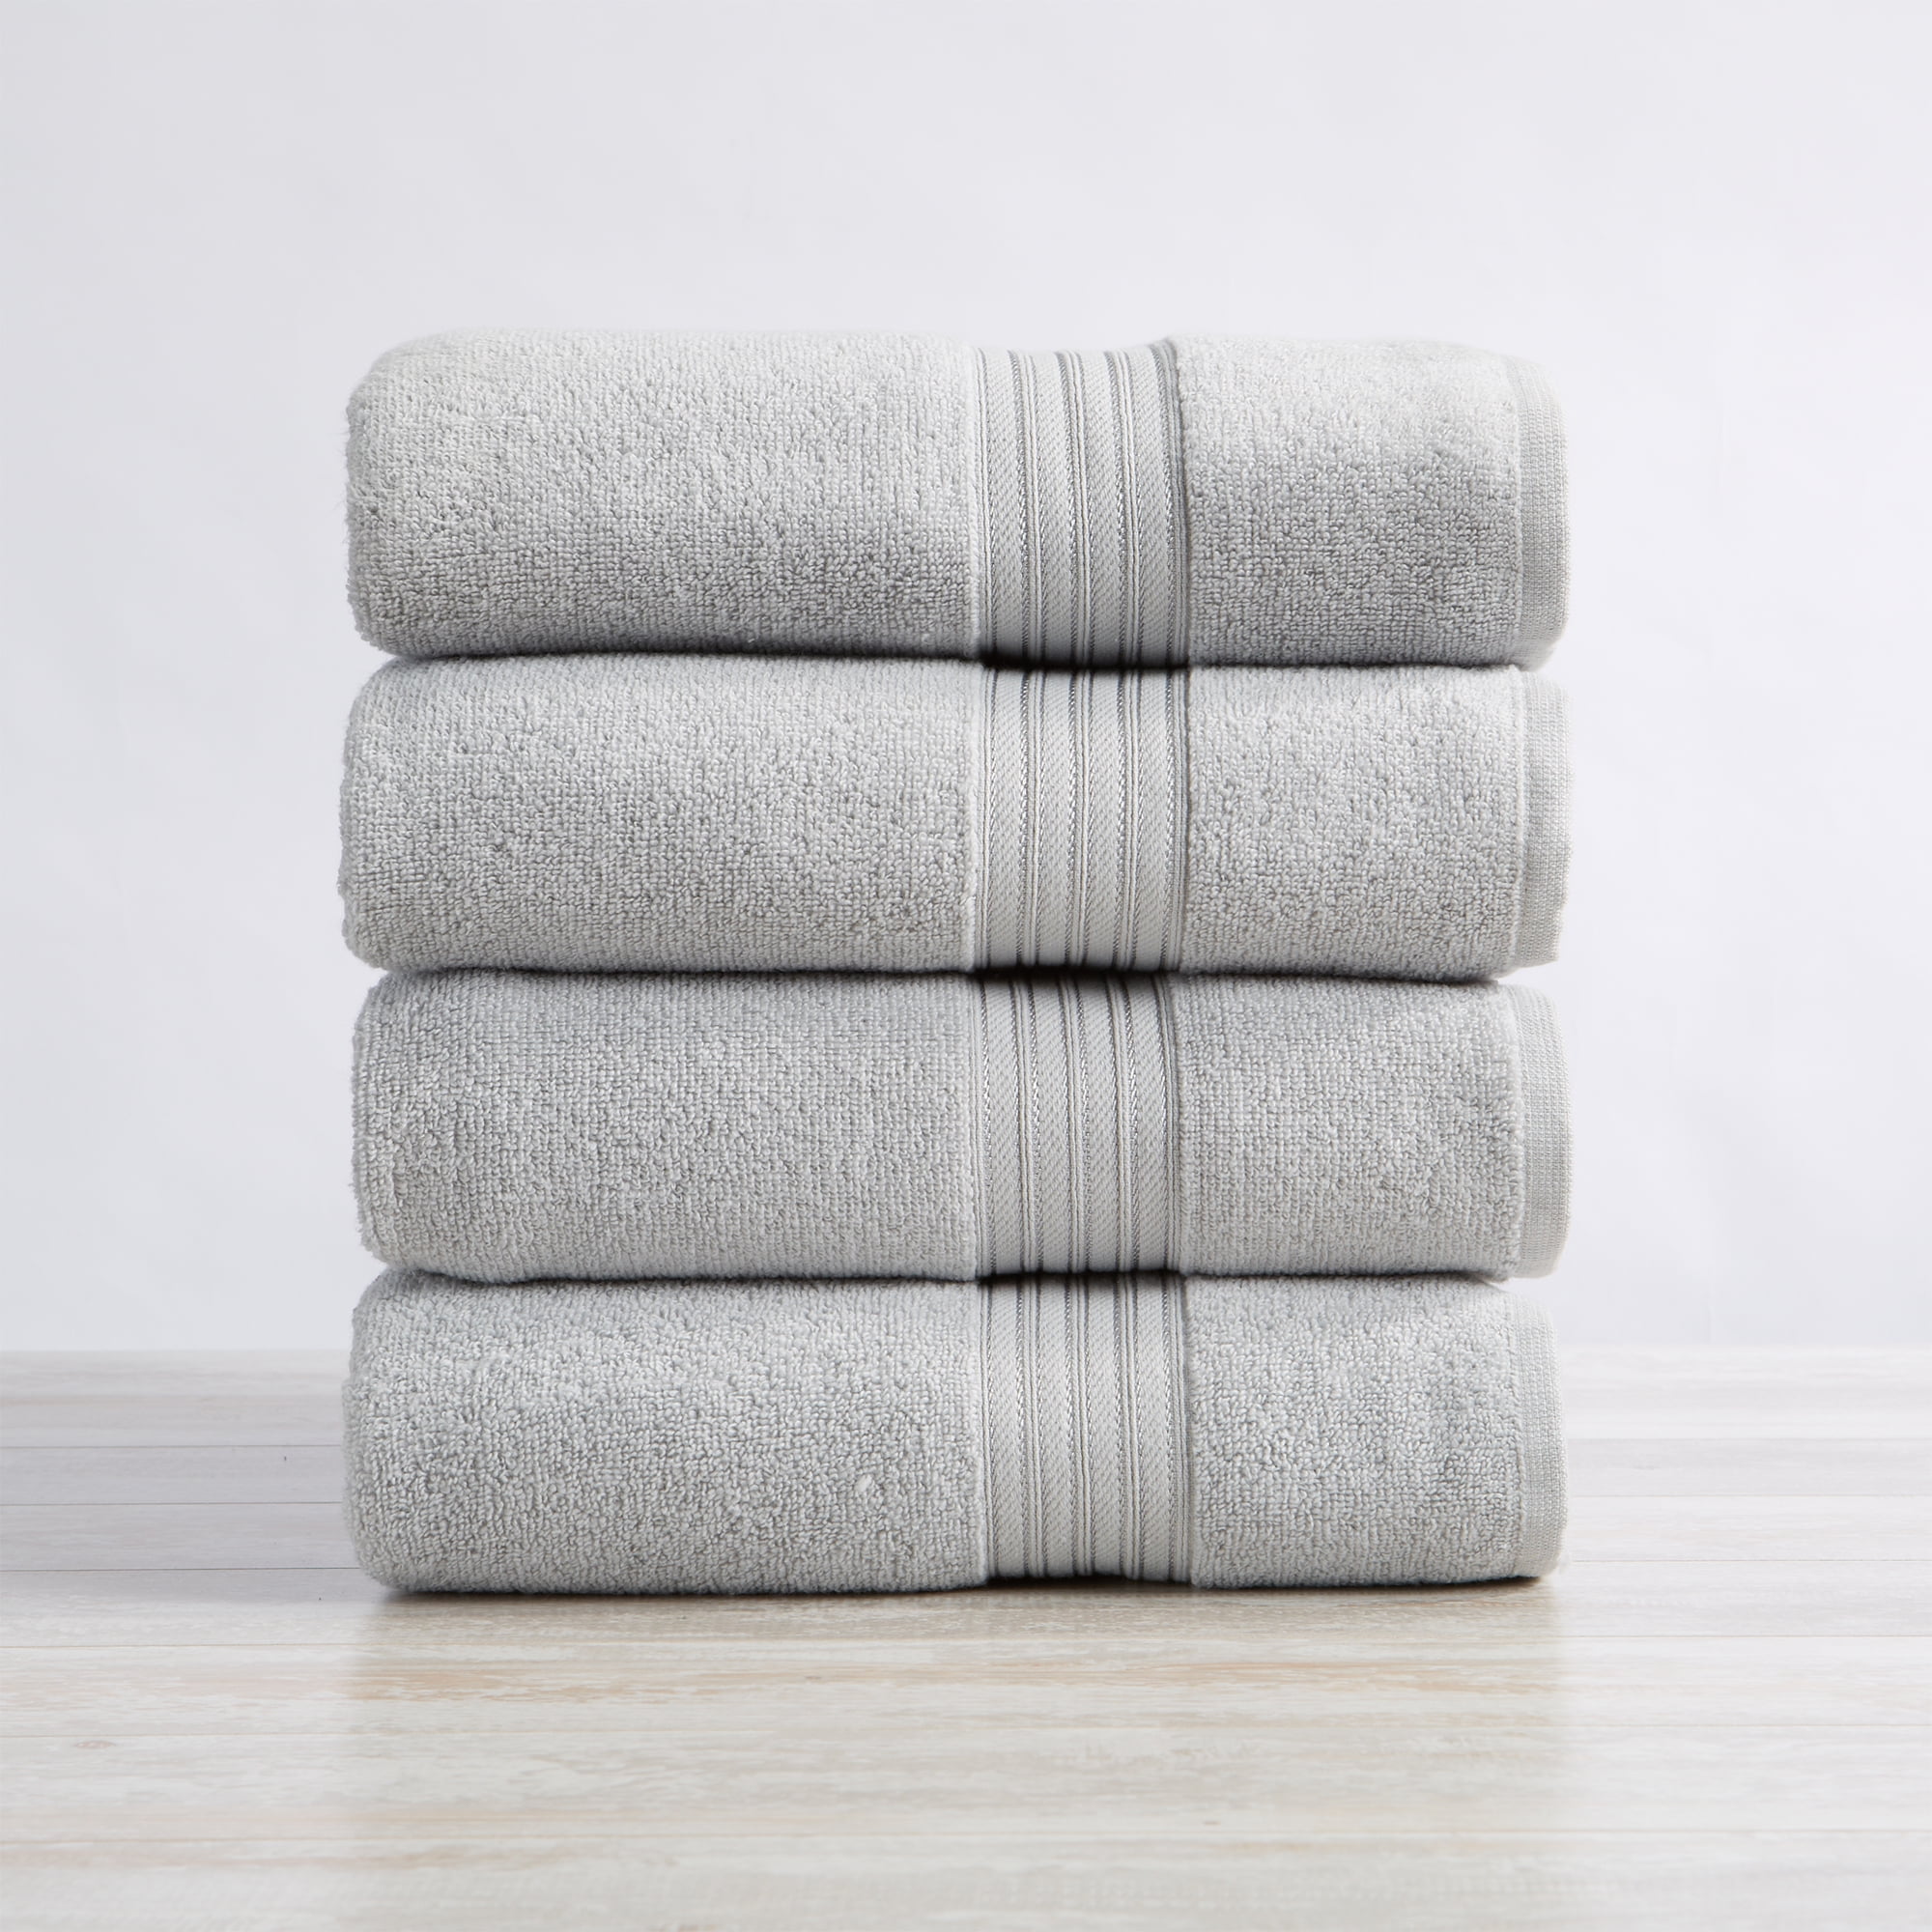 White Classic Luxury Bath Towels Large - Cotton Hotel spa Bathroom Towel, 30x56, 4 Pack